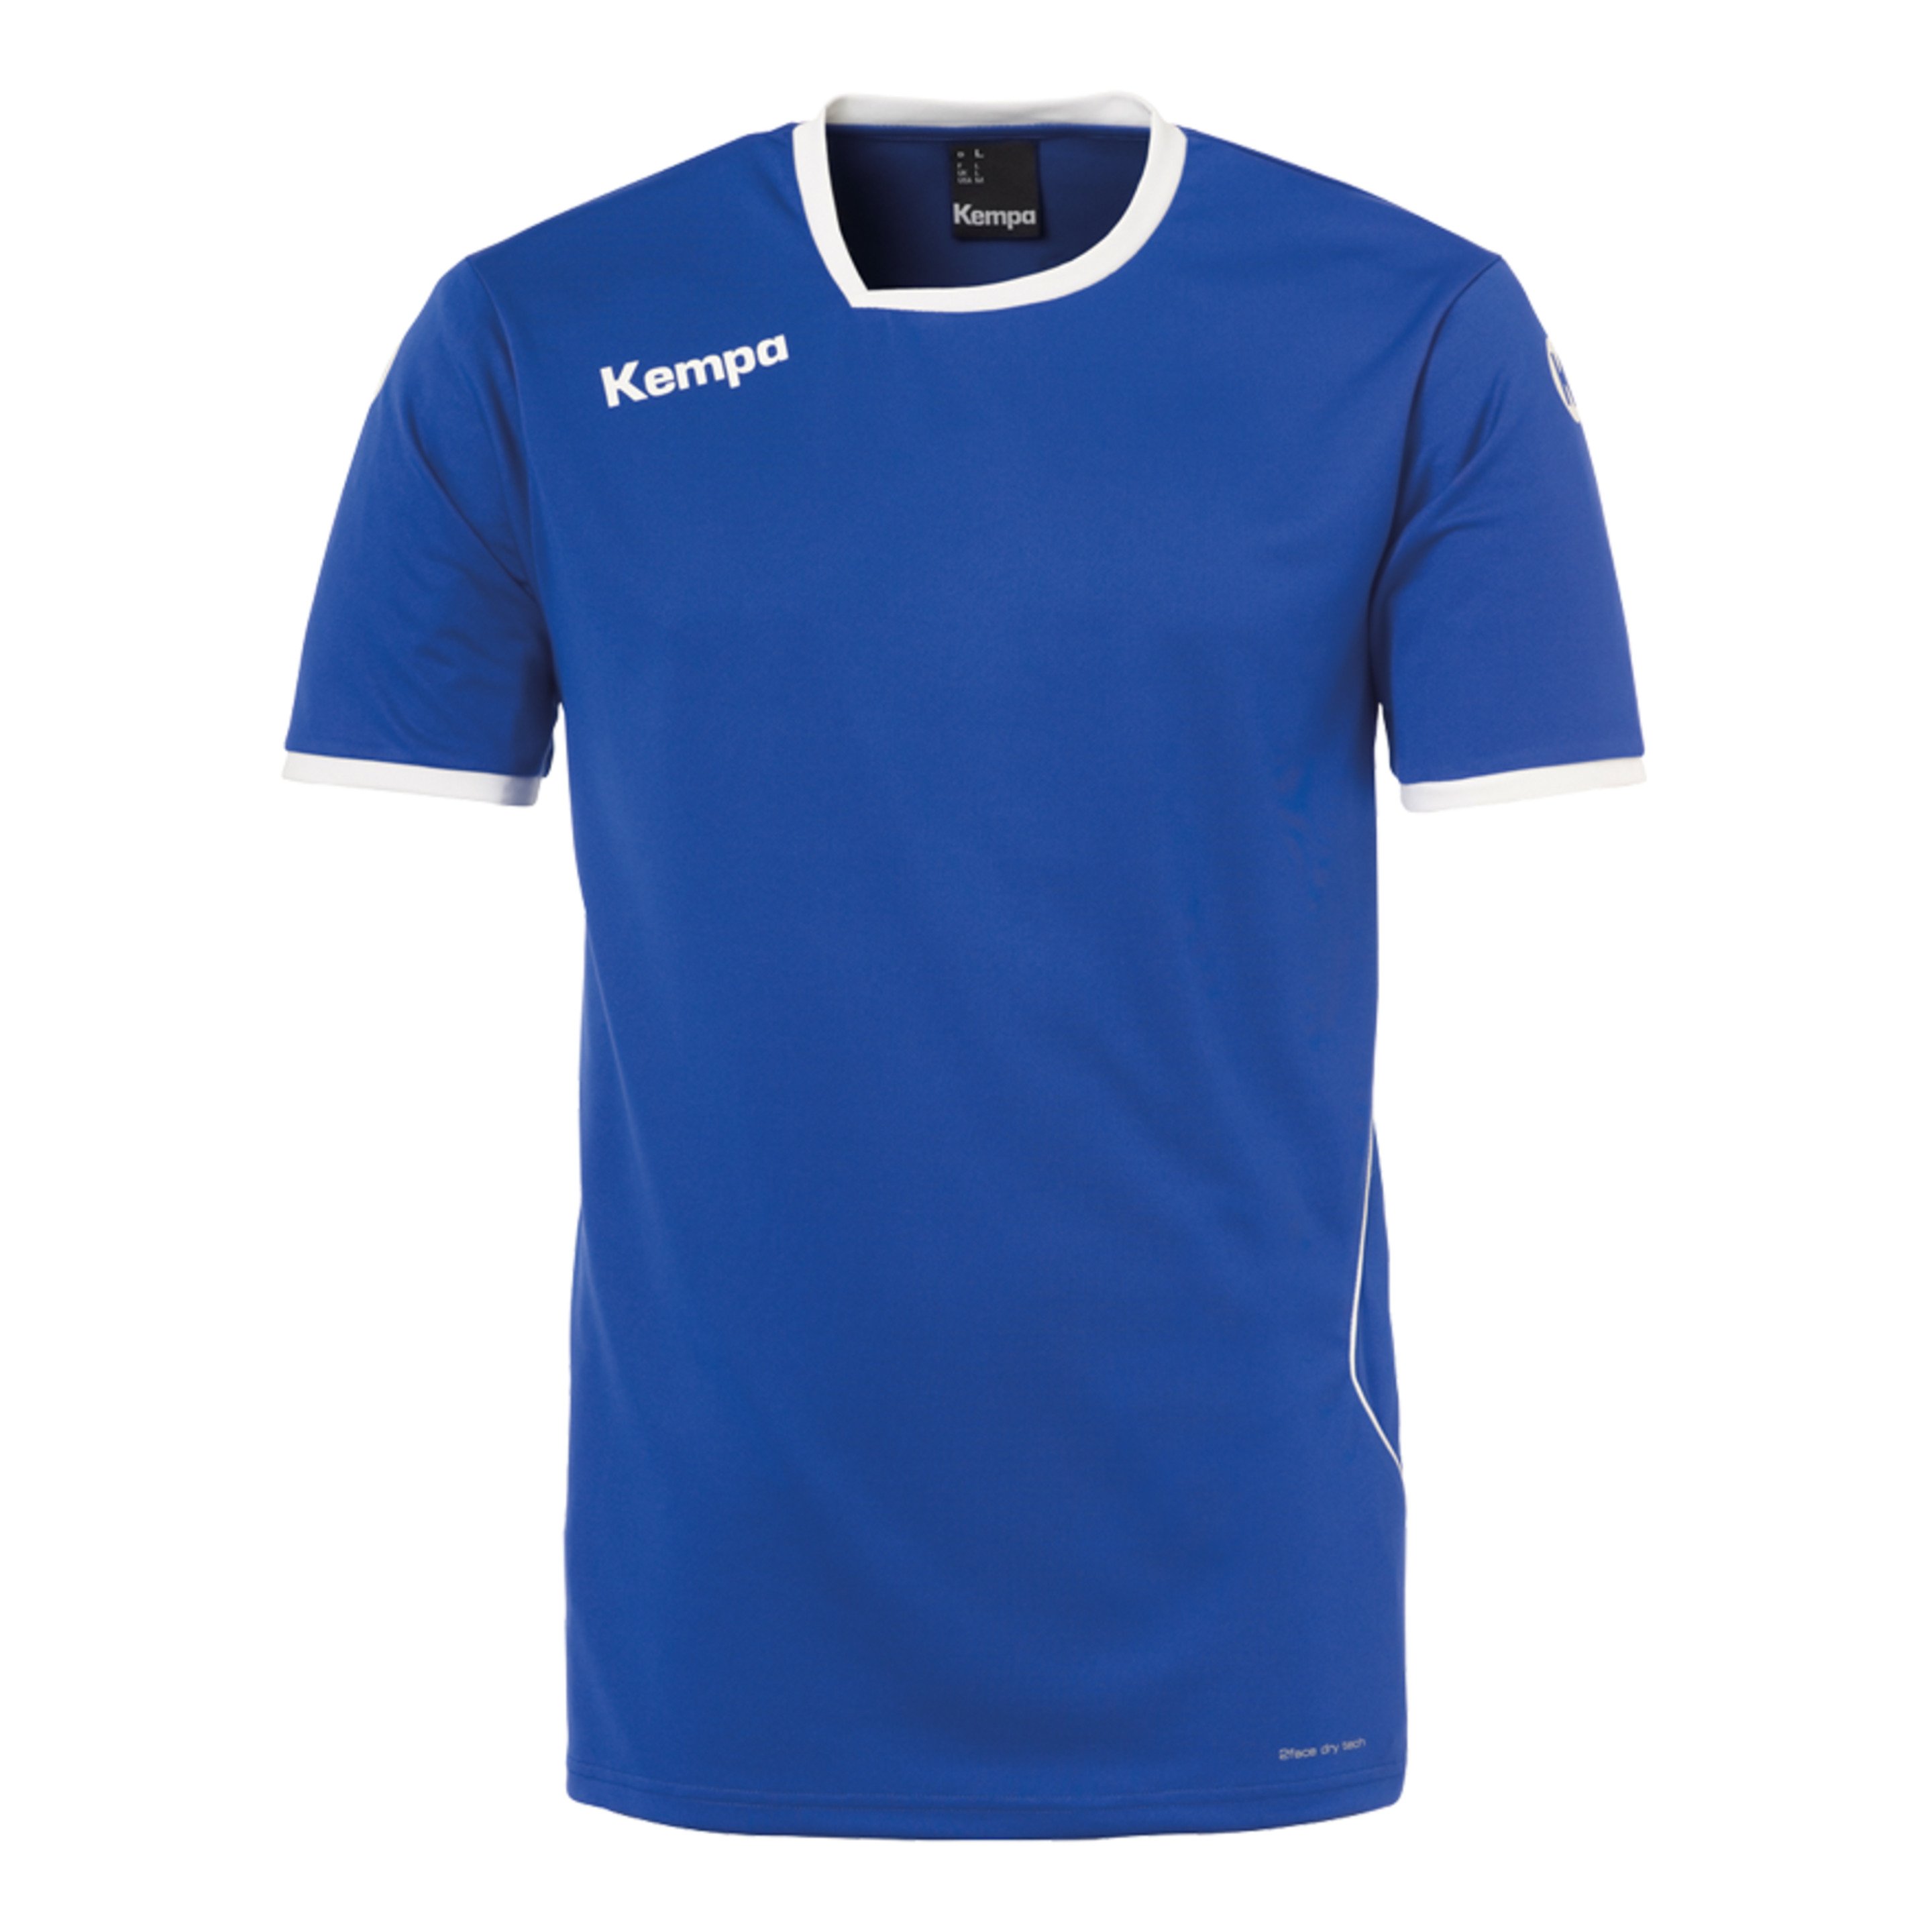 Curve Camiseta Azul Royal/blanco Kempa